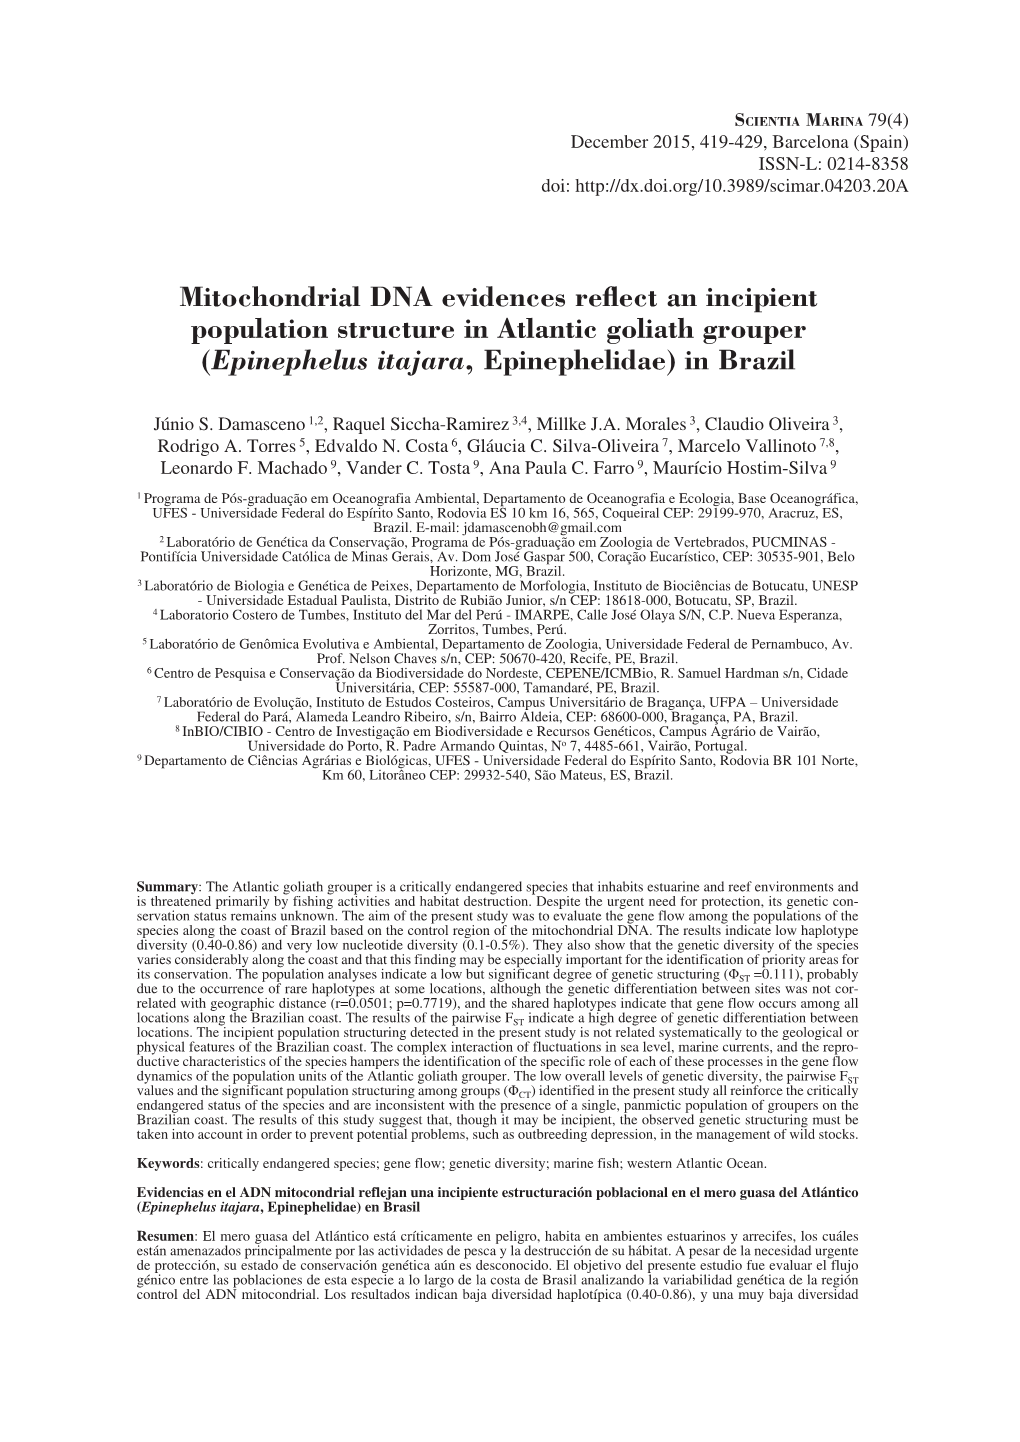 Mitochondrial DNA Evidences Reflect an Incipient Population Structure in Atlantic Goliath Grouper (Epinephelus Itajara, Epinephelidae) in Brazil